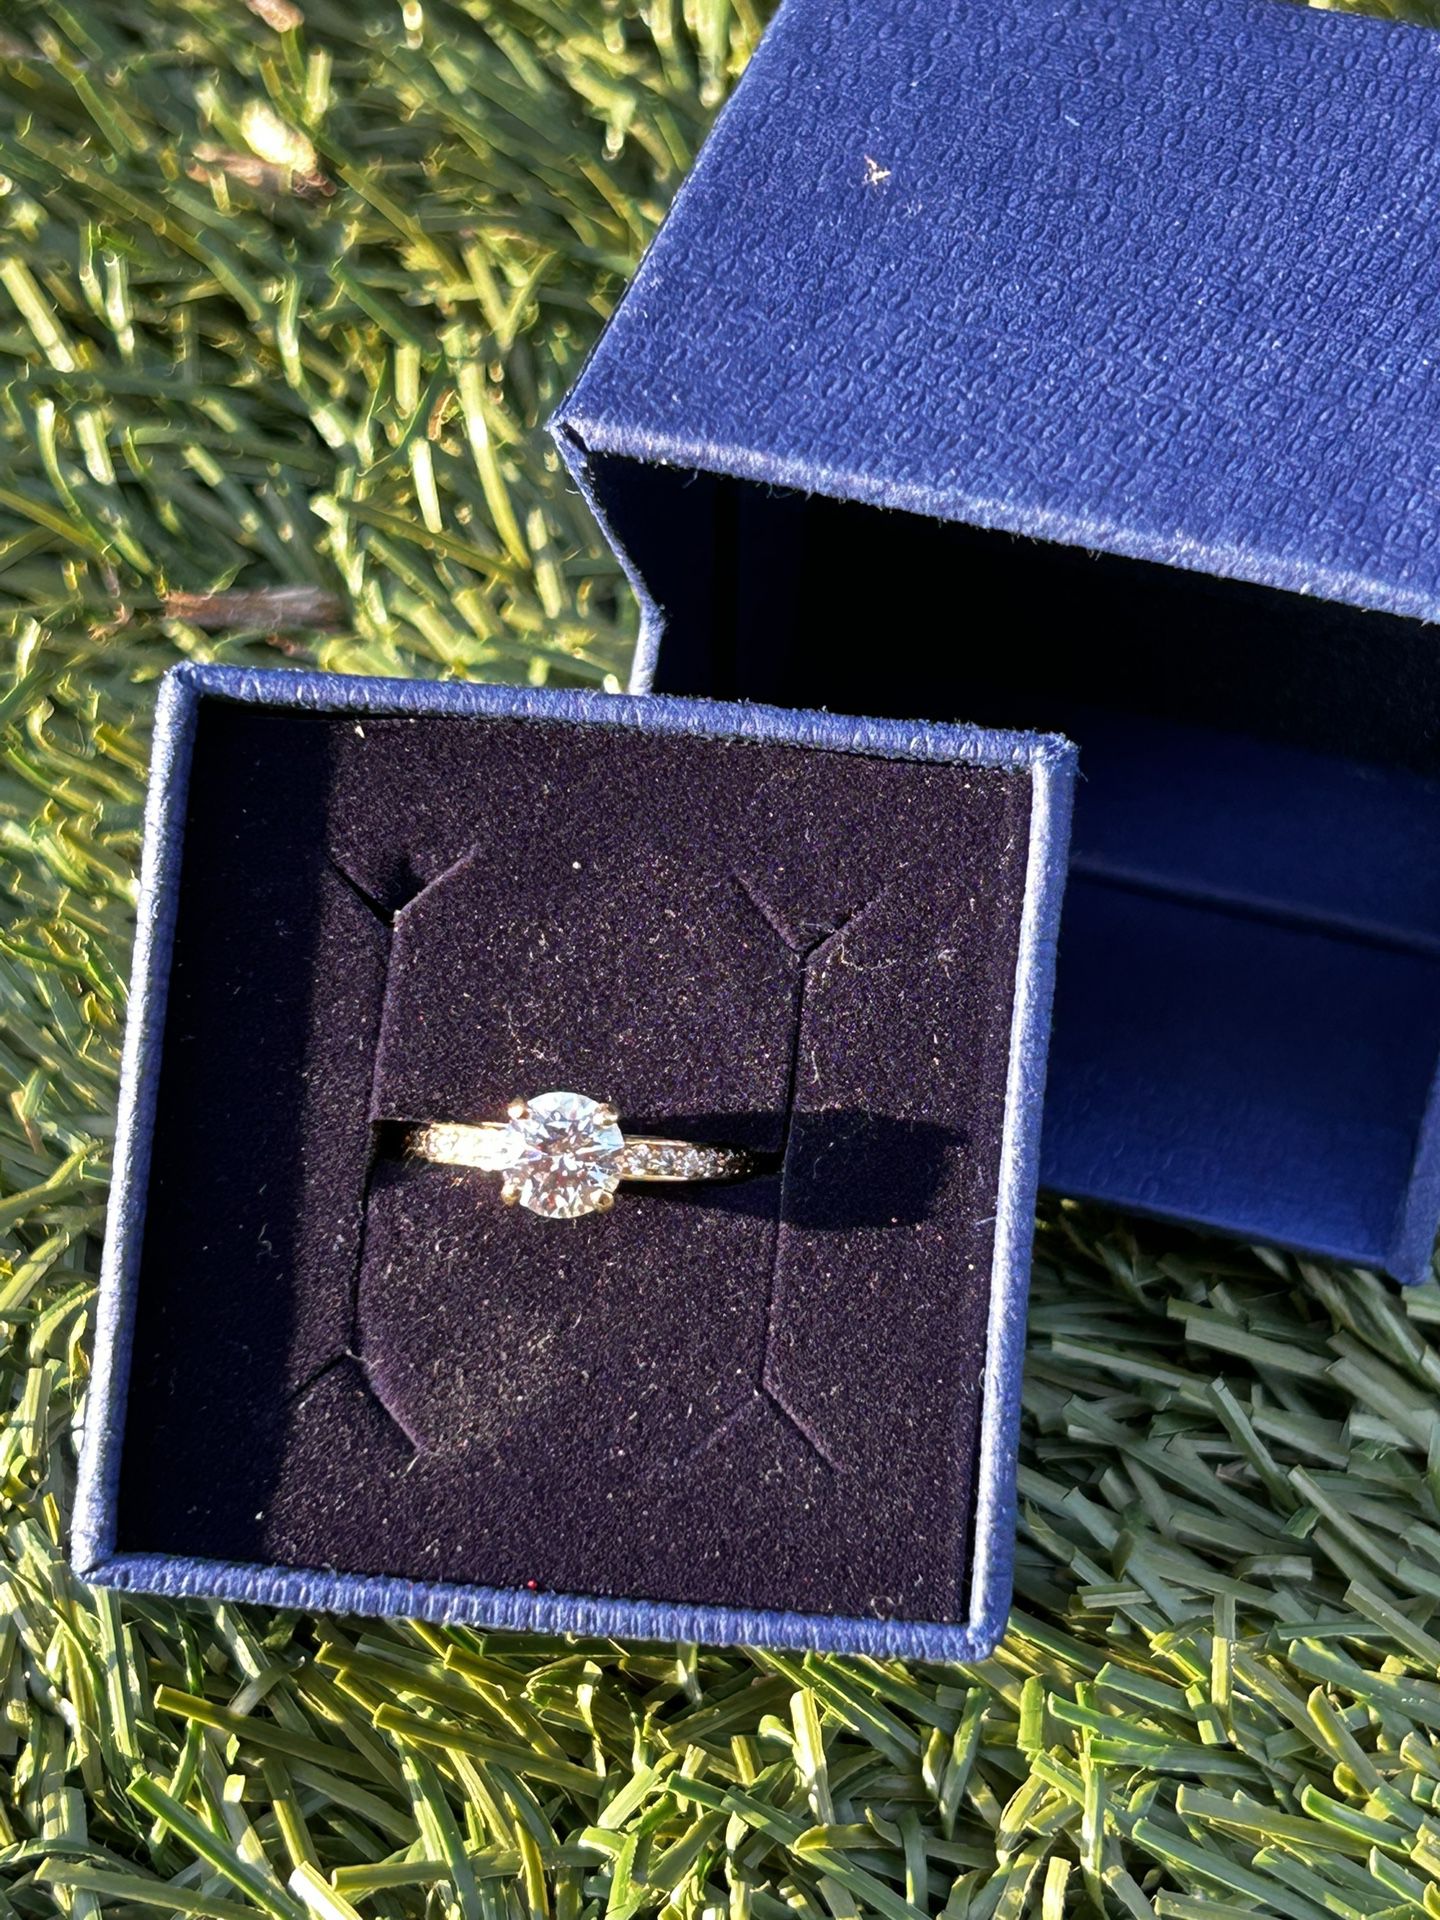 Engagement Ring Swarovski 